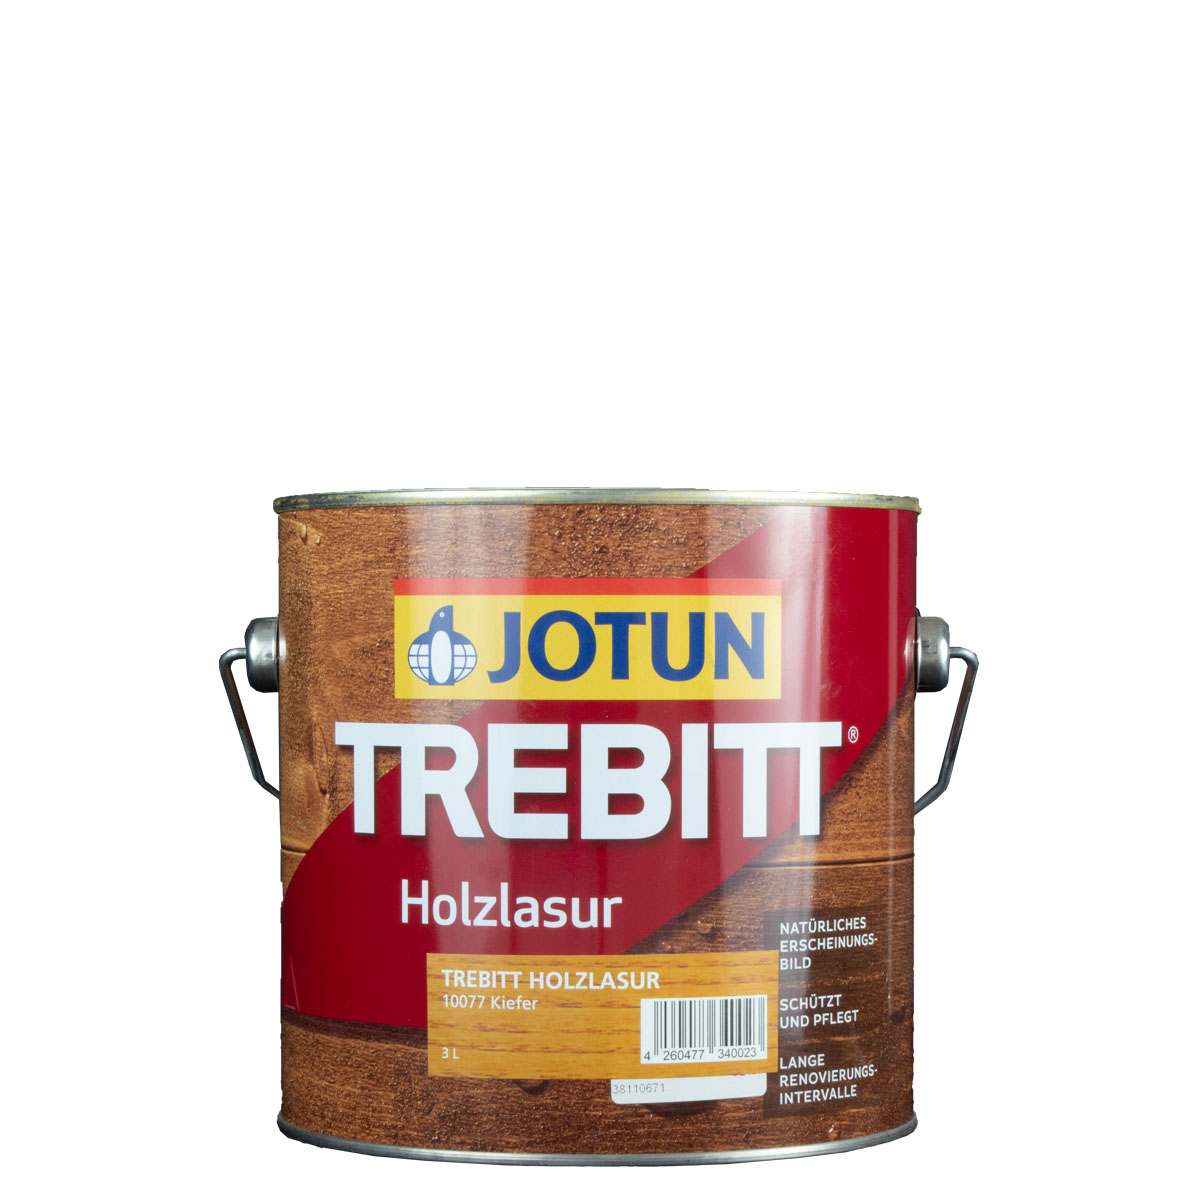 Jotun Trebitt 3L palisander 675, Holzschutzlasur